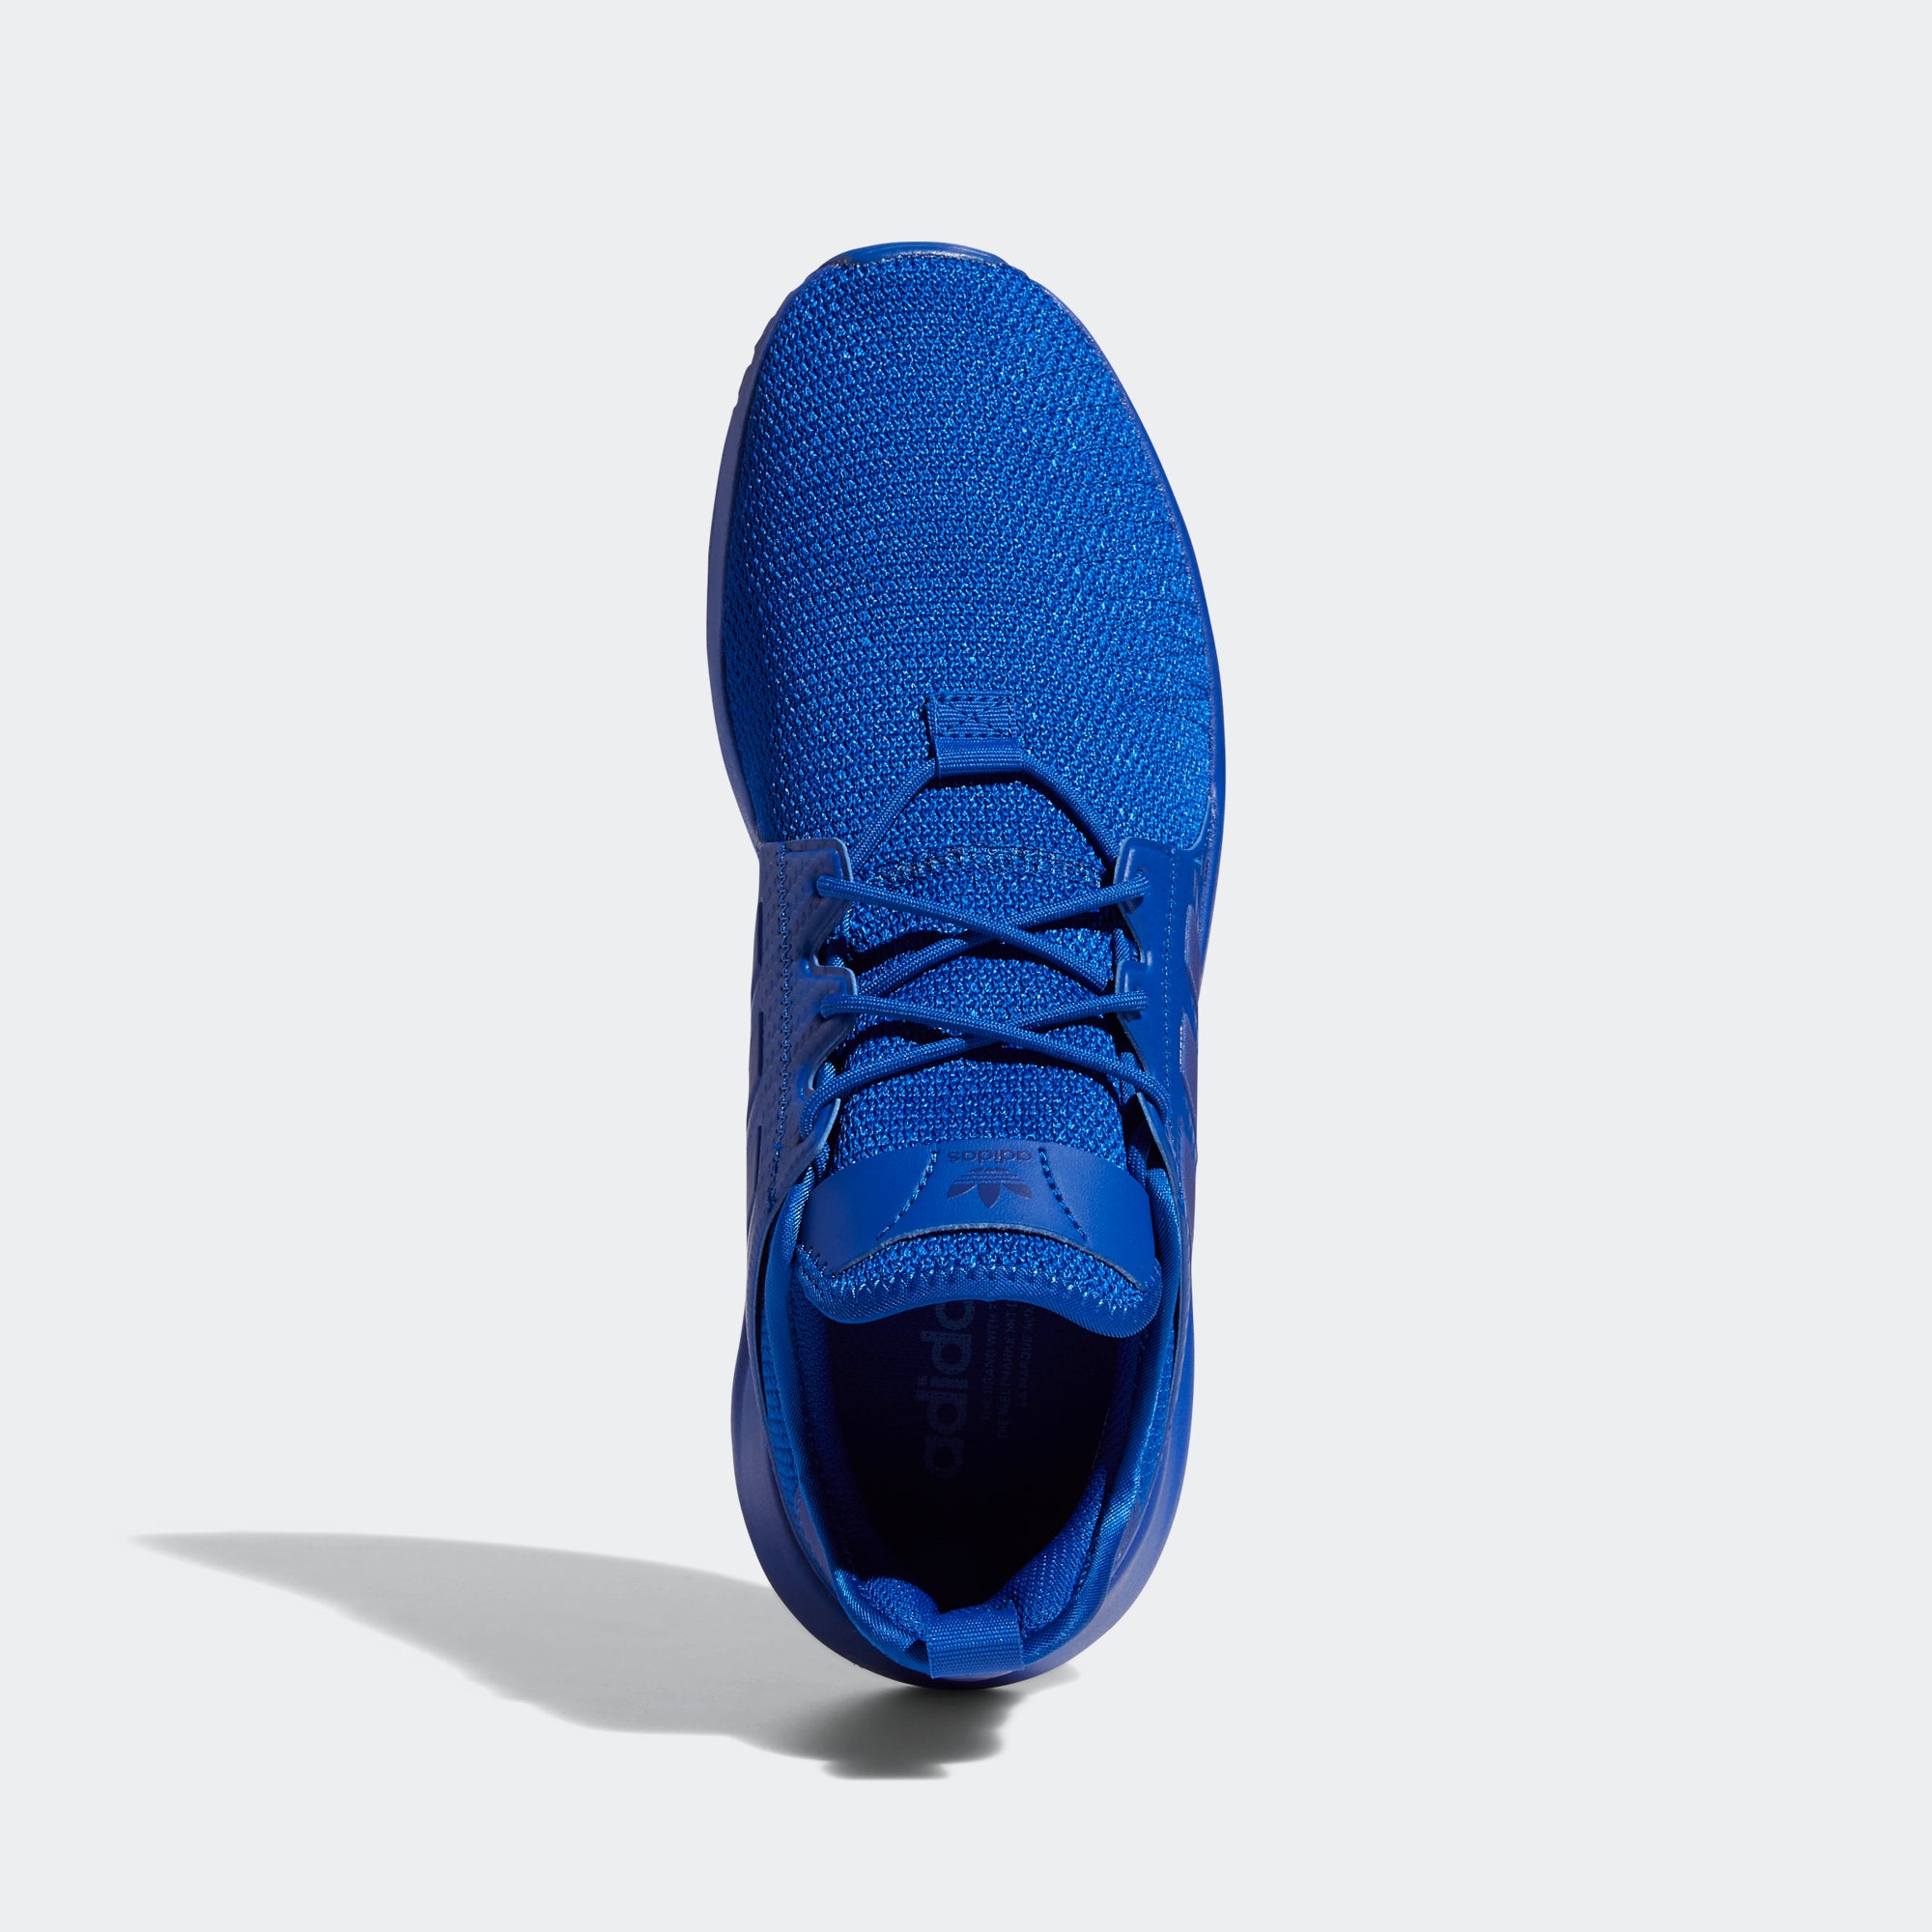 adidas shoes royal blue